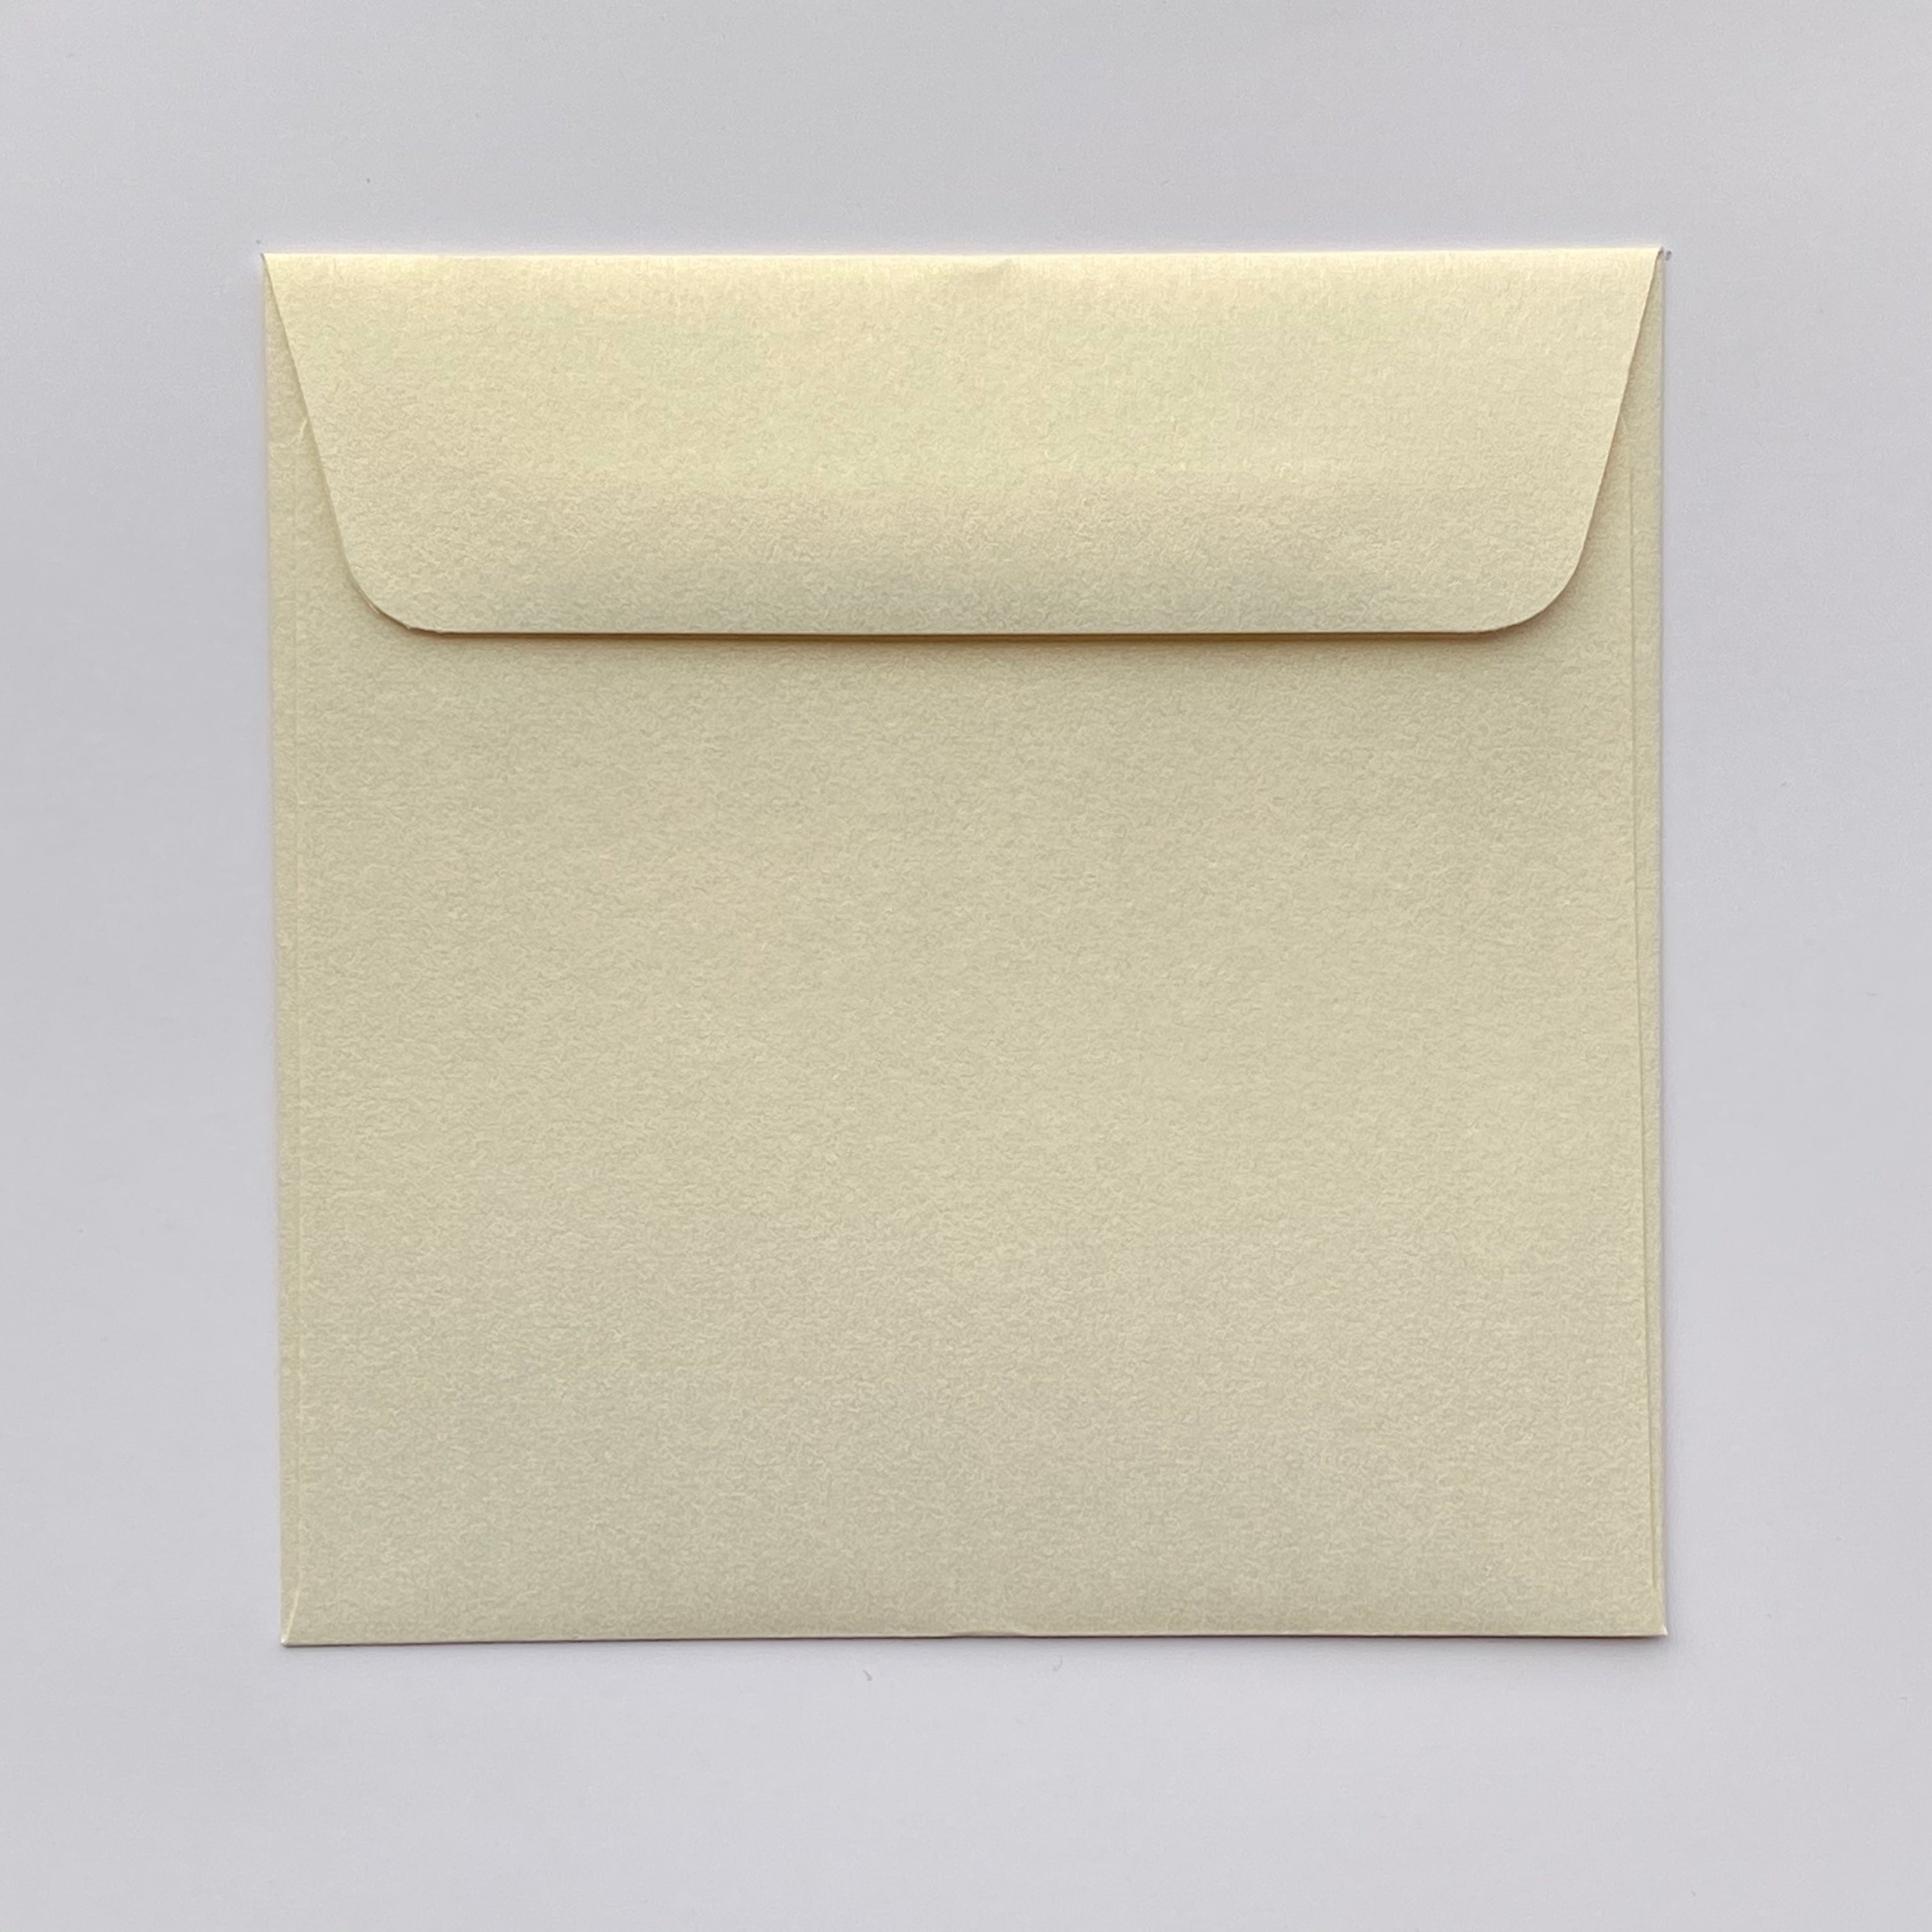 85mm square metallic envelopes